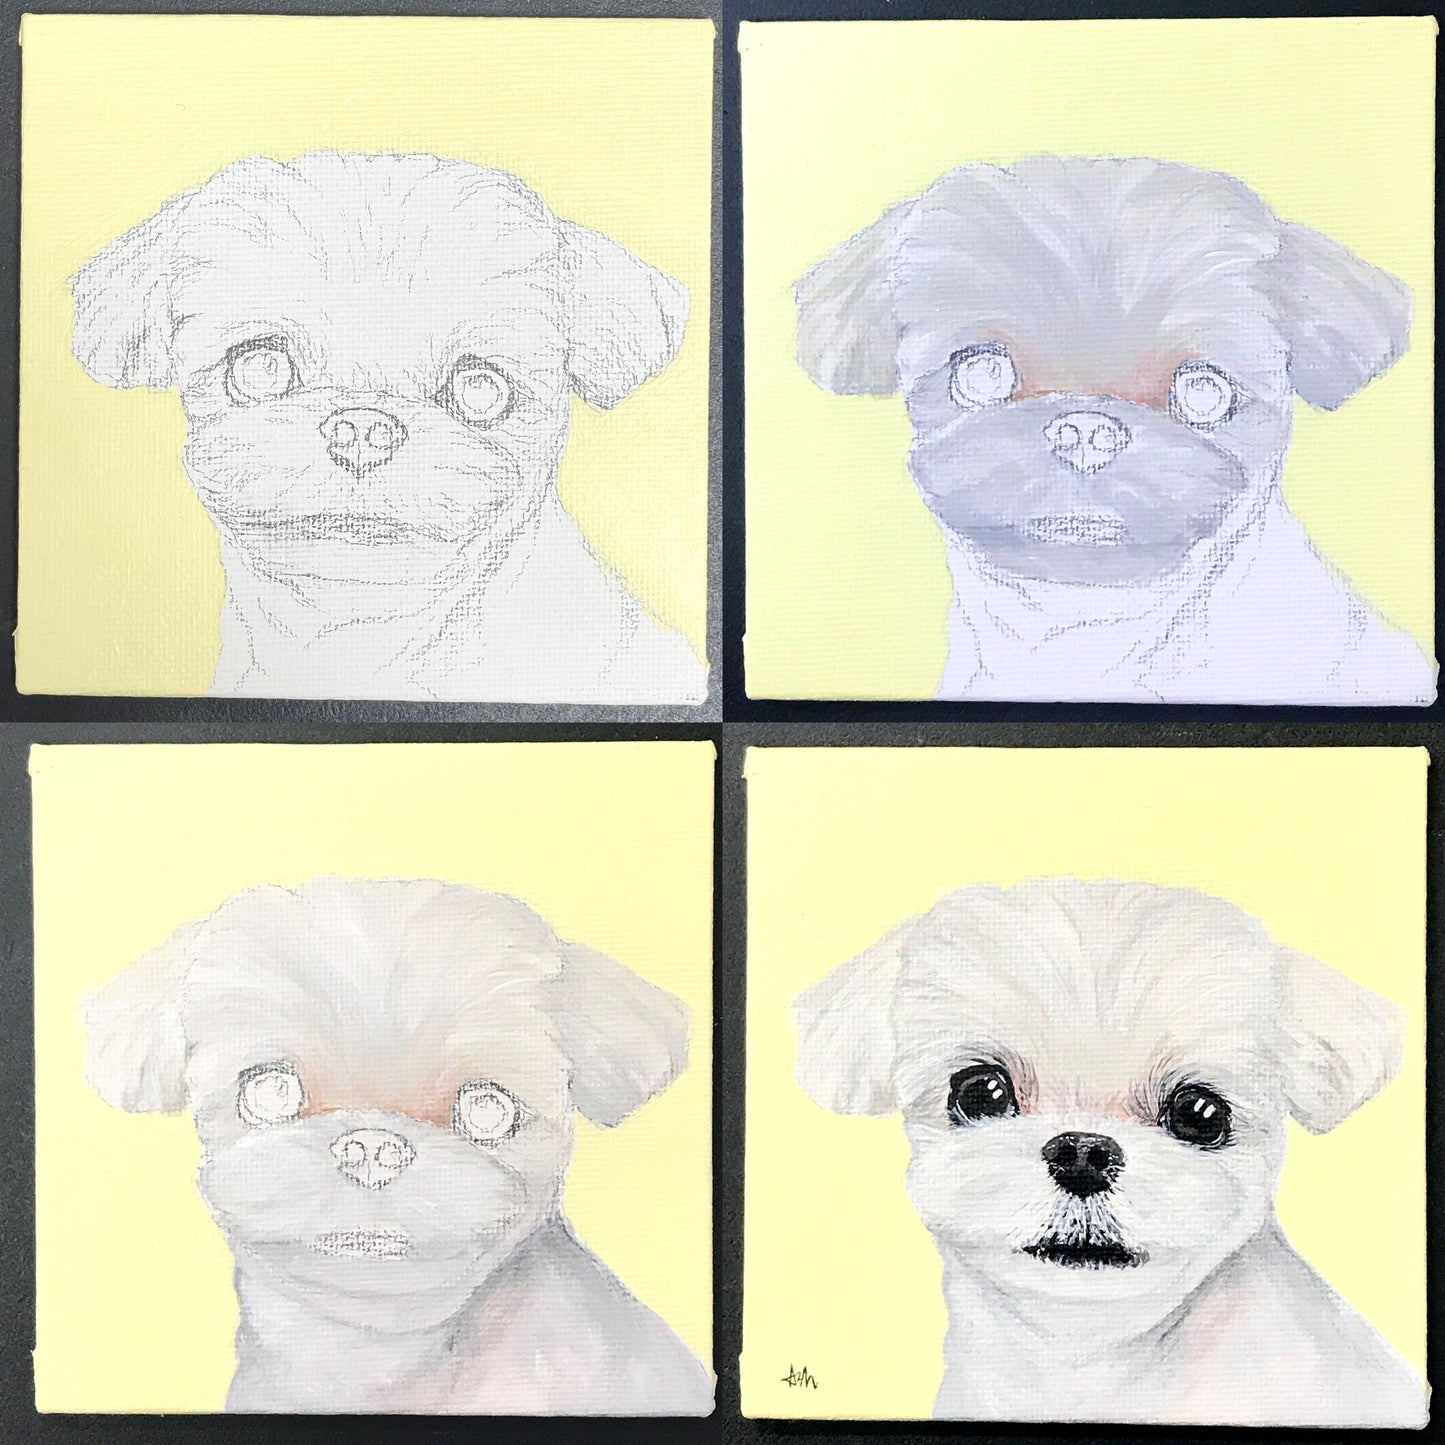 Pet Portrait - Acrylic Painting Class 寵物塑膠彩畫班